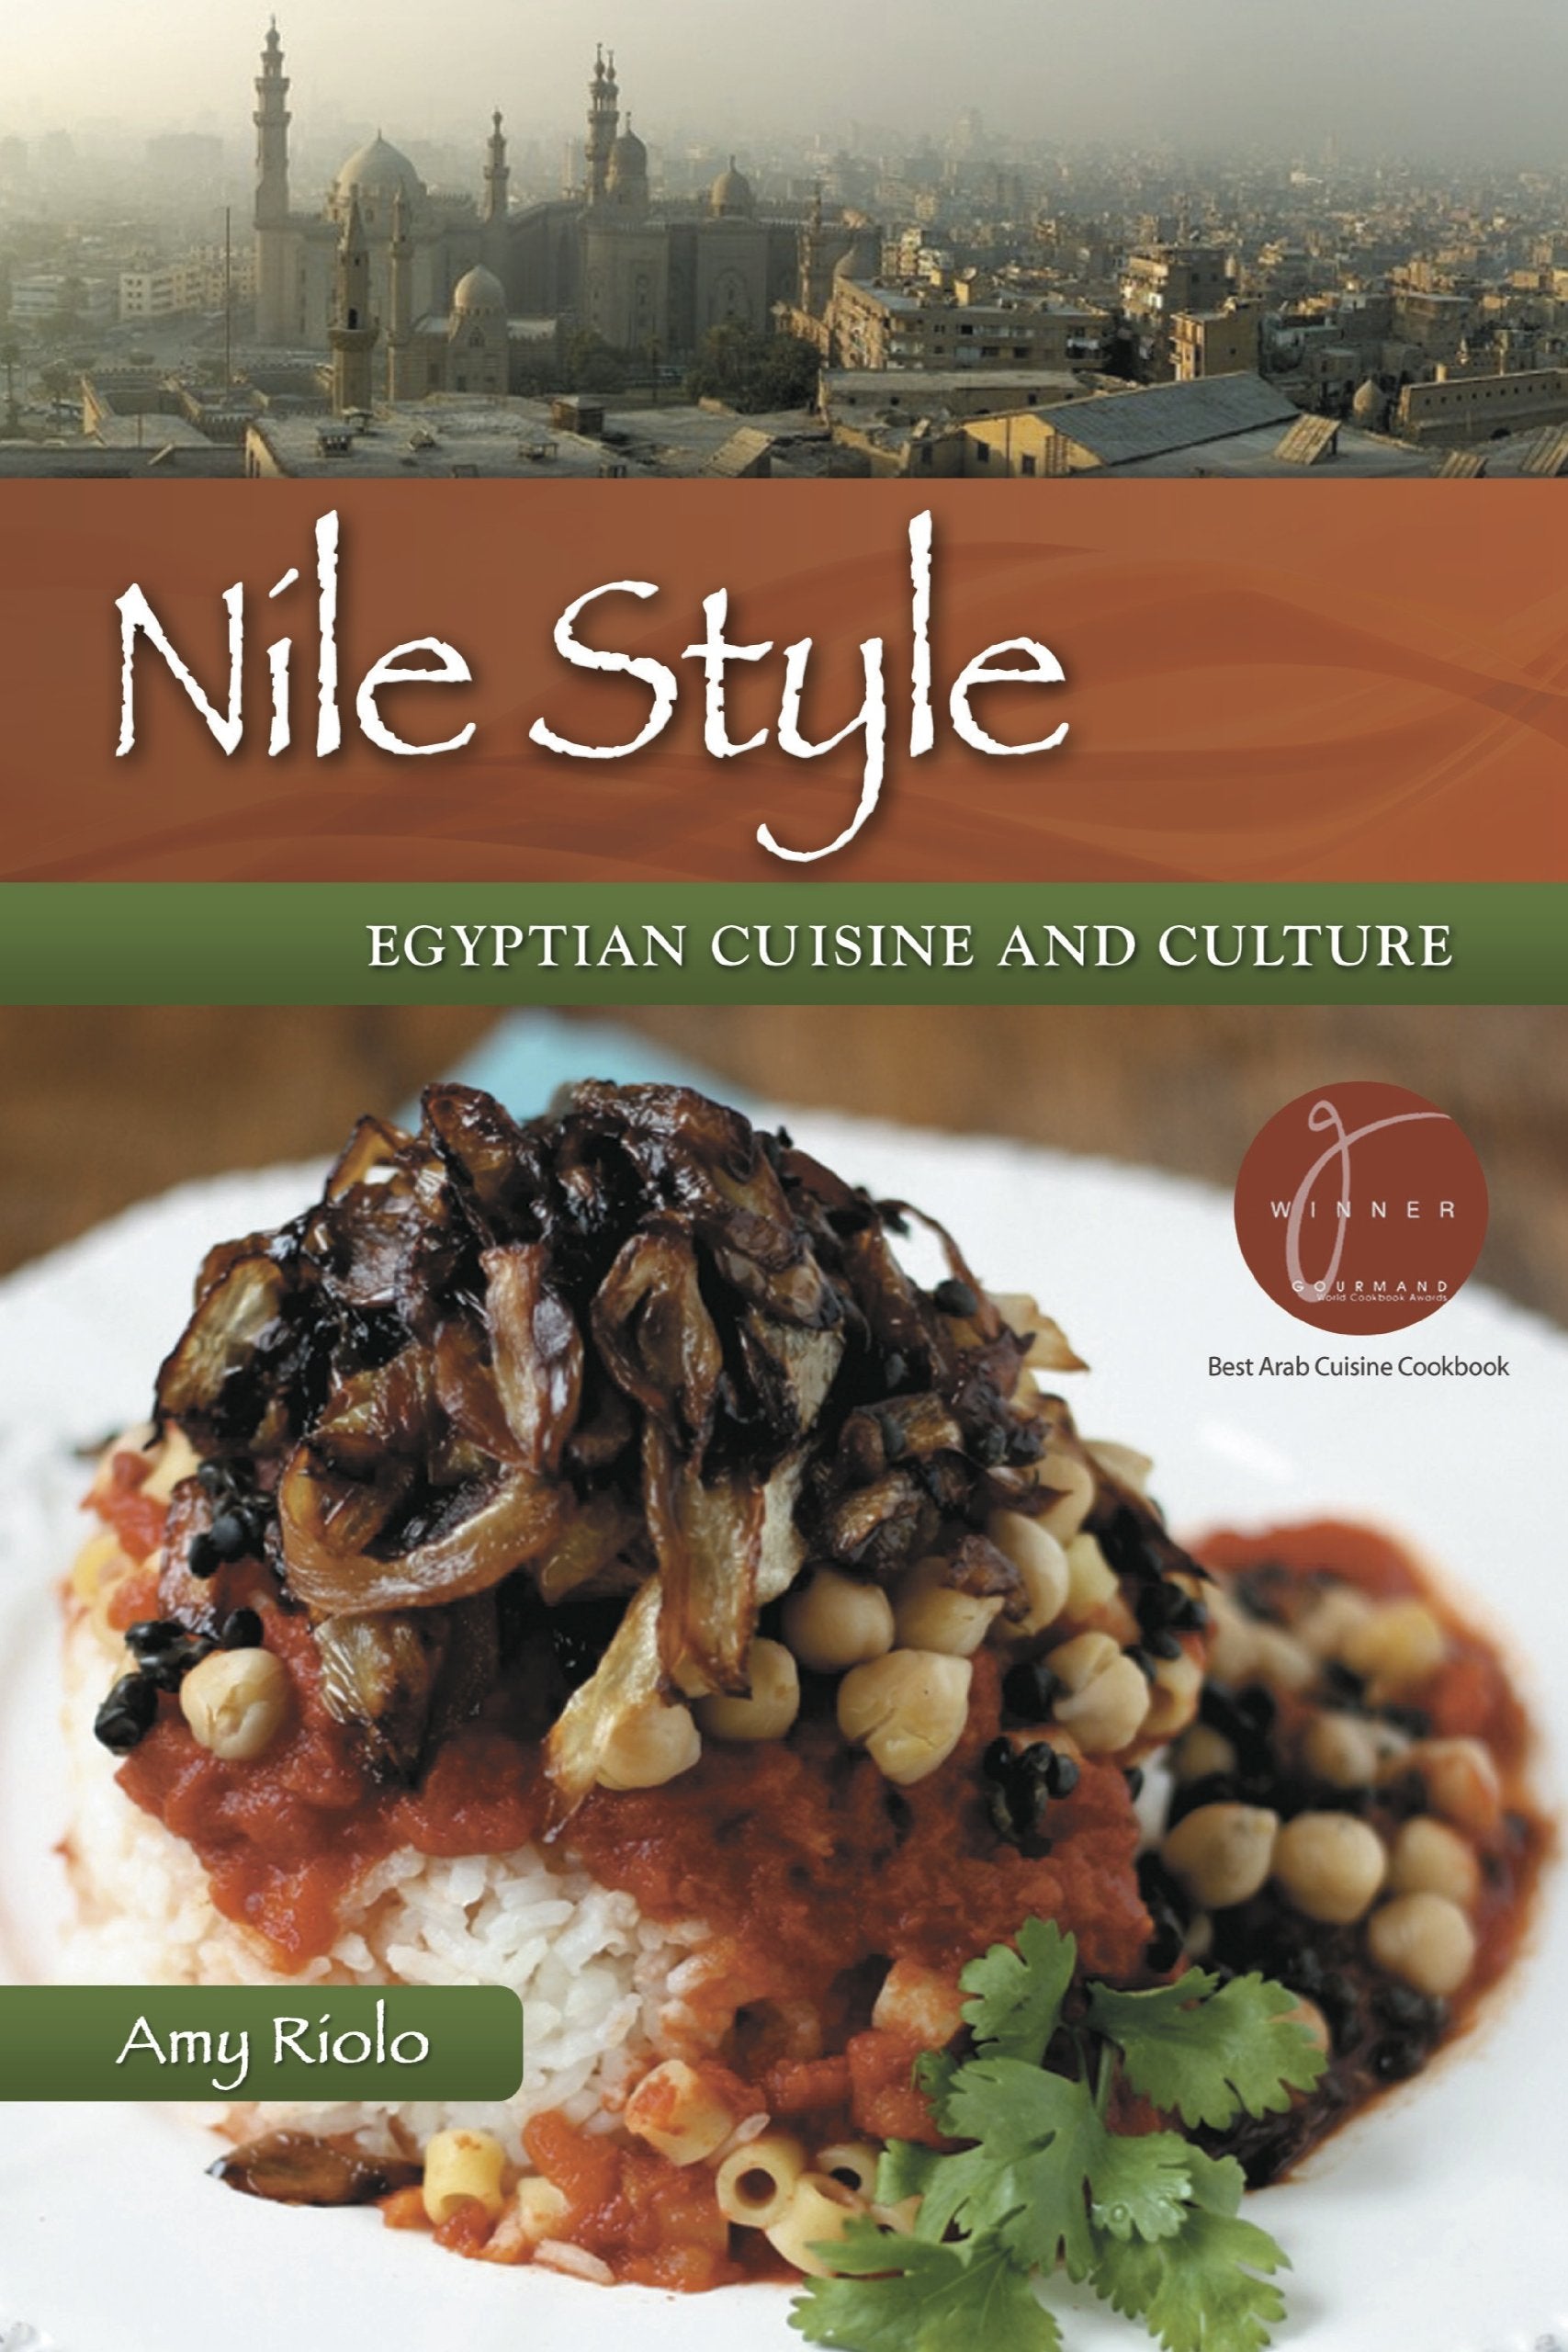 Nile Style: Egyptian Cuisine and Culture (Amy Riolo)